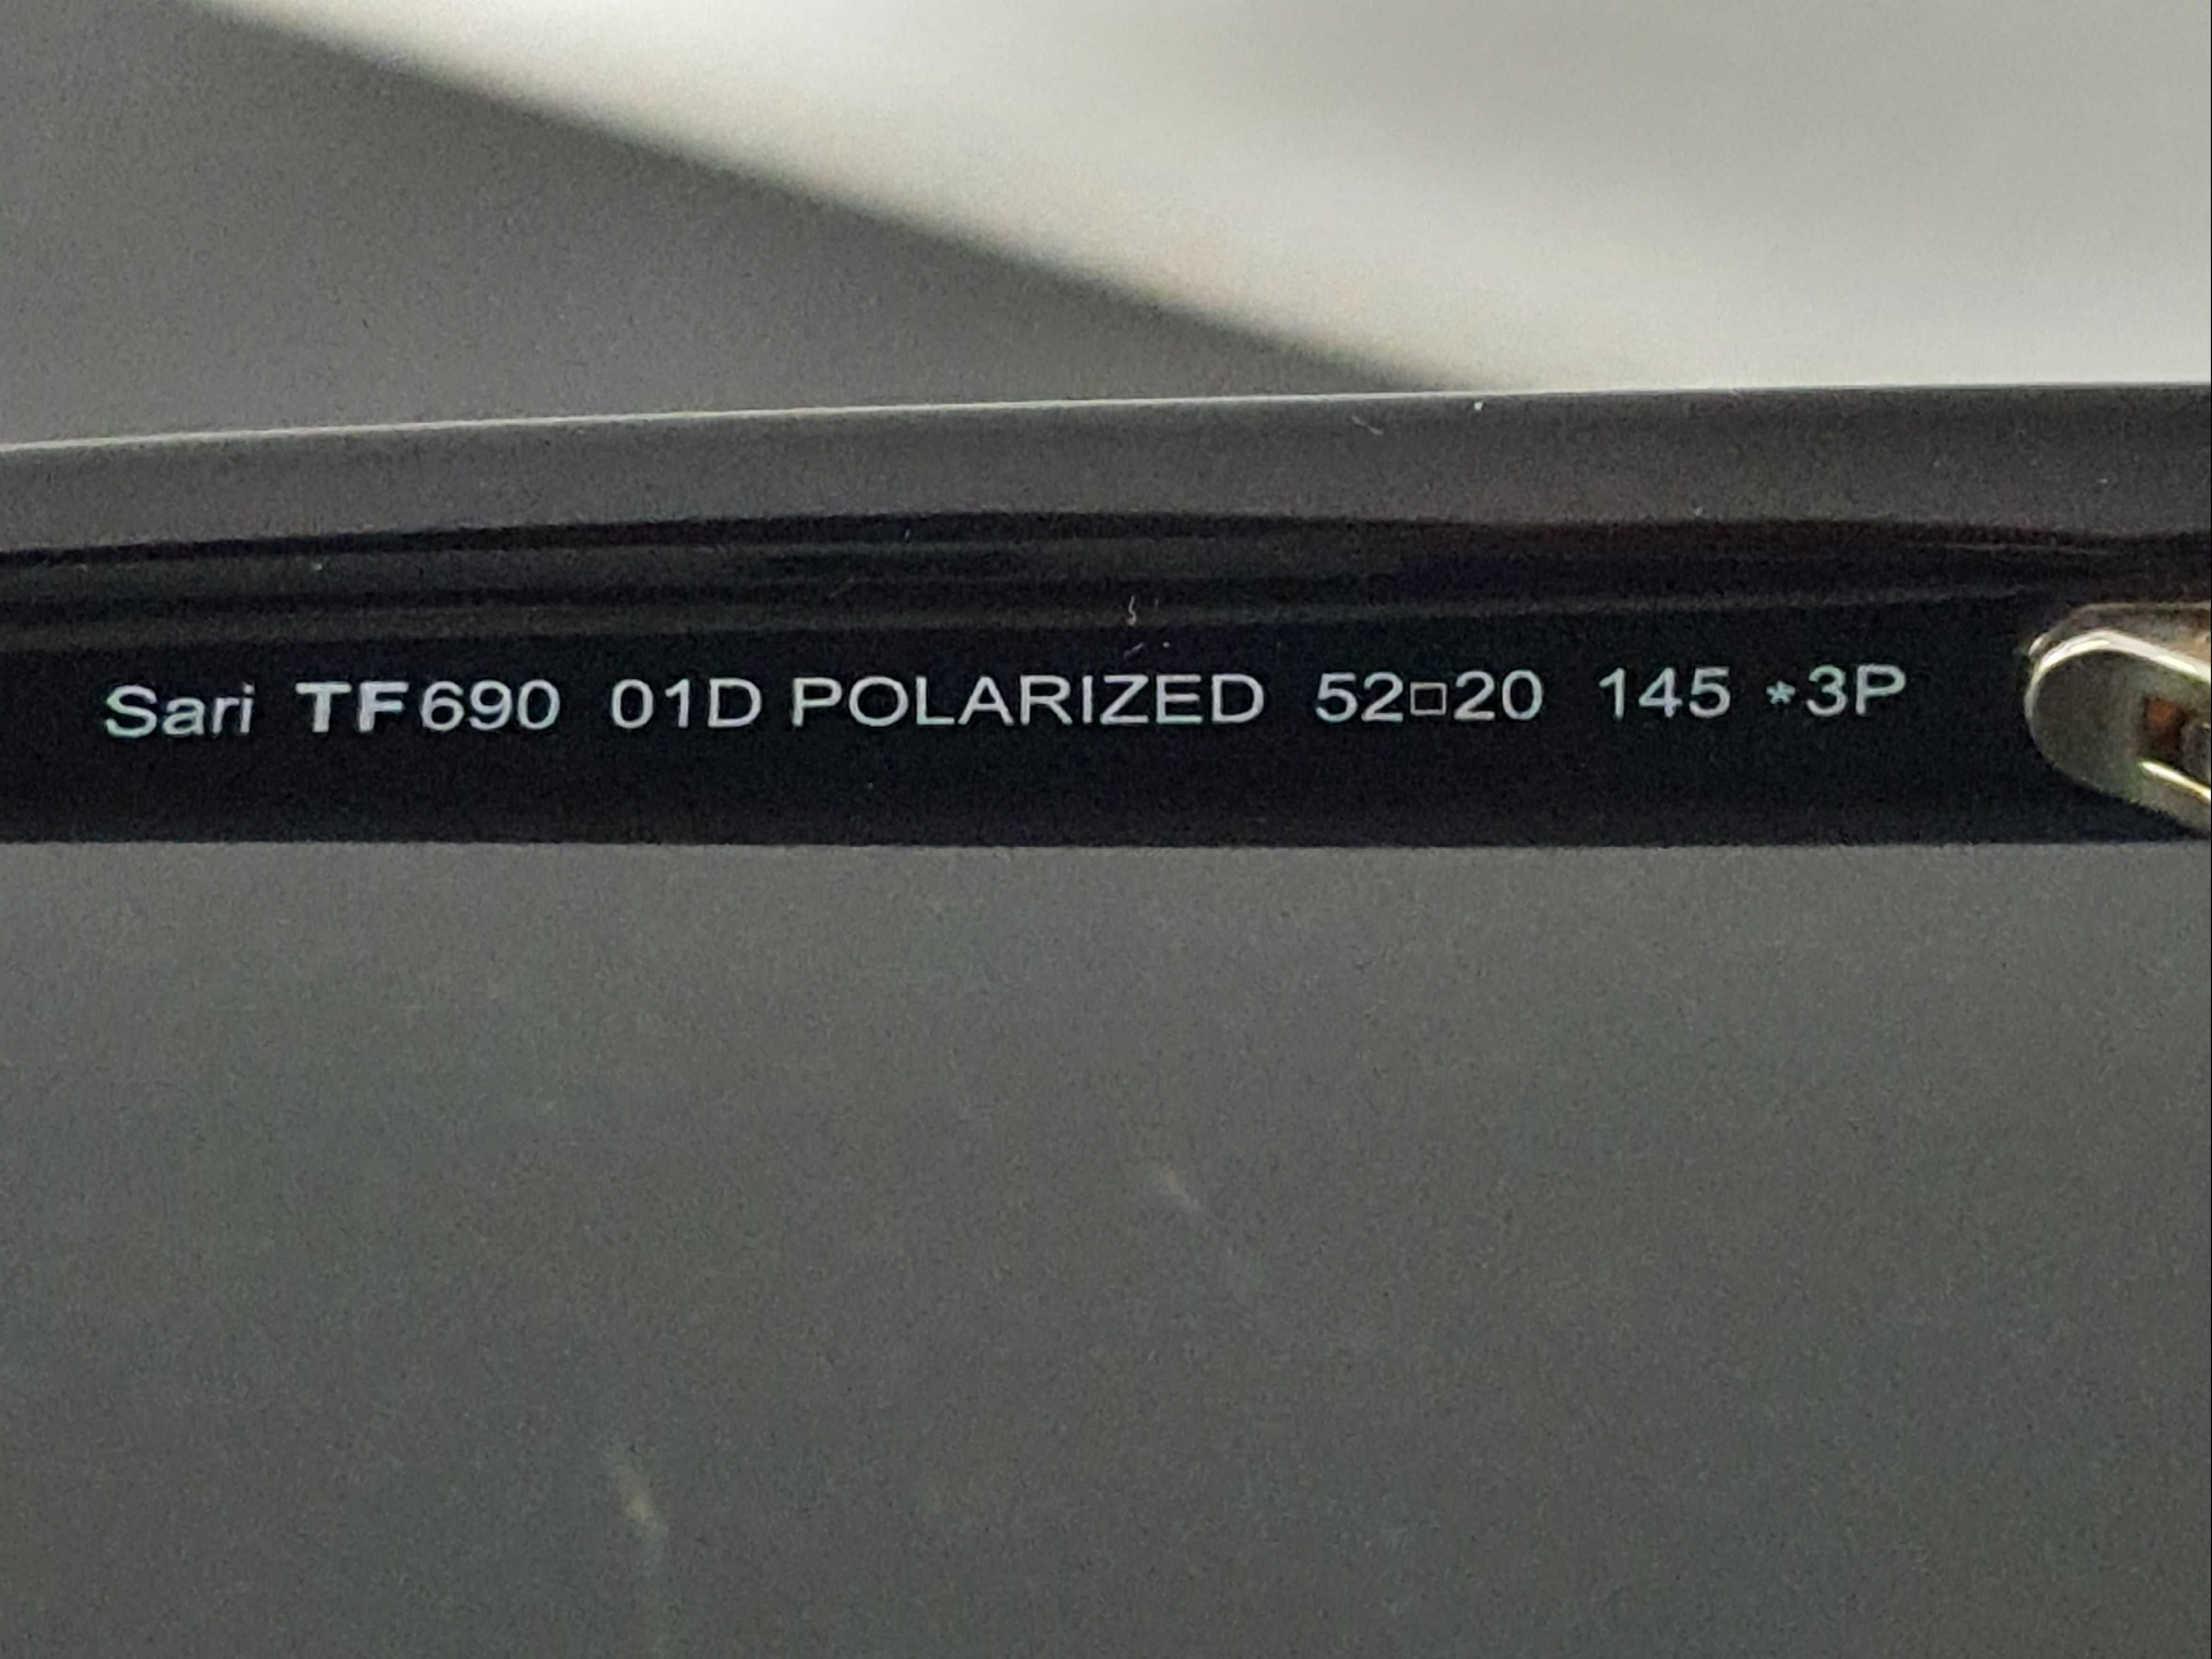 Ochelari de soare Tom Ford Sari TF690 polarized originali de dama